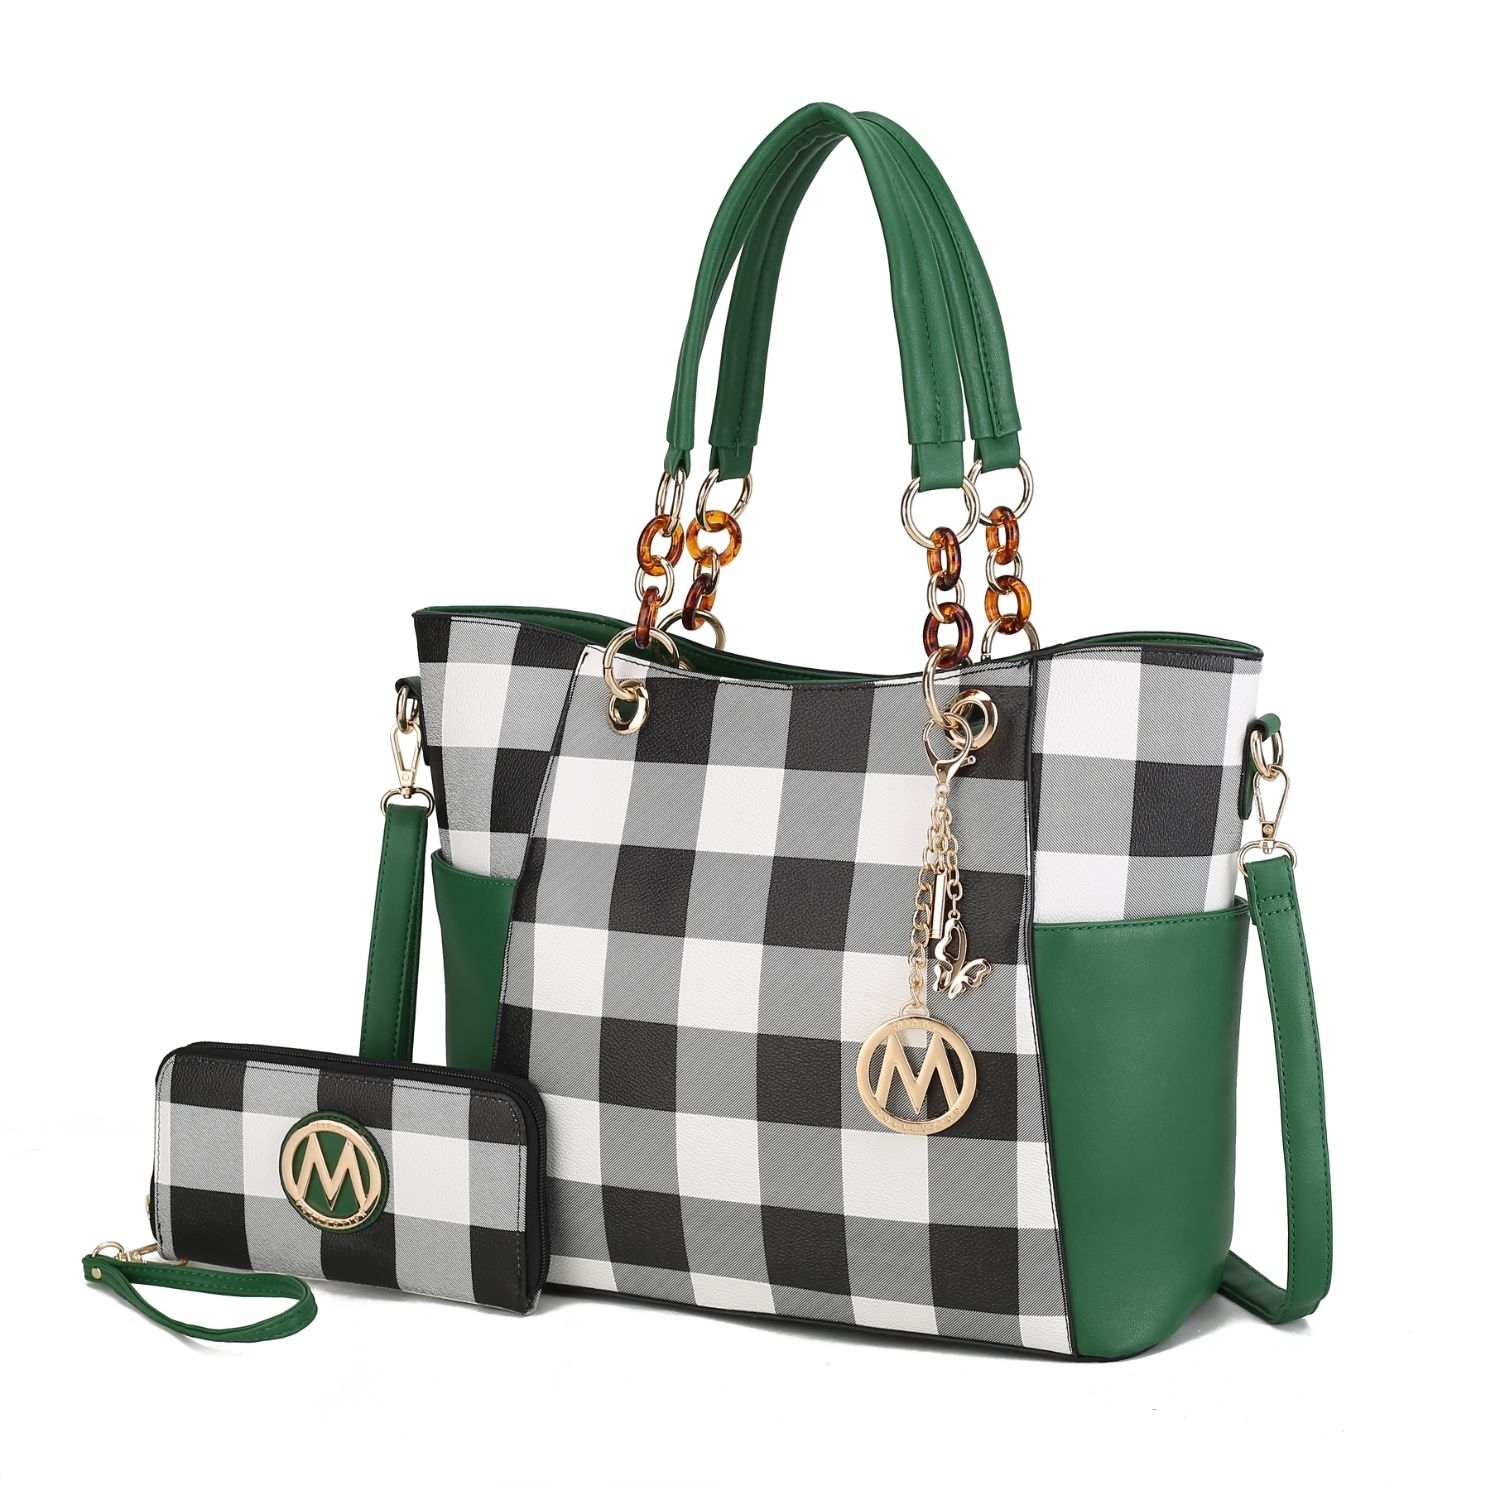 Bonita Checkered Tote 2 Pcs Wome's Large Handbag With Wallet And Decorative M Keychain By Mia K. - Black